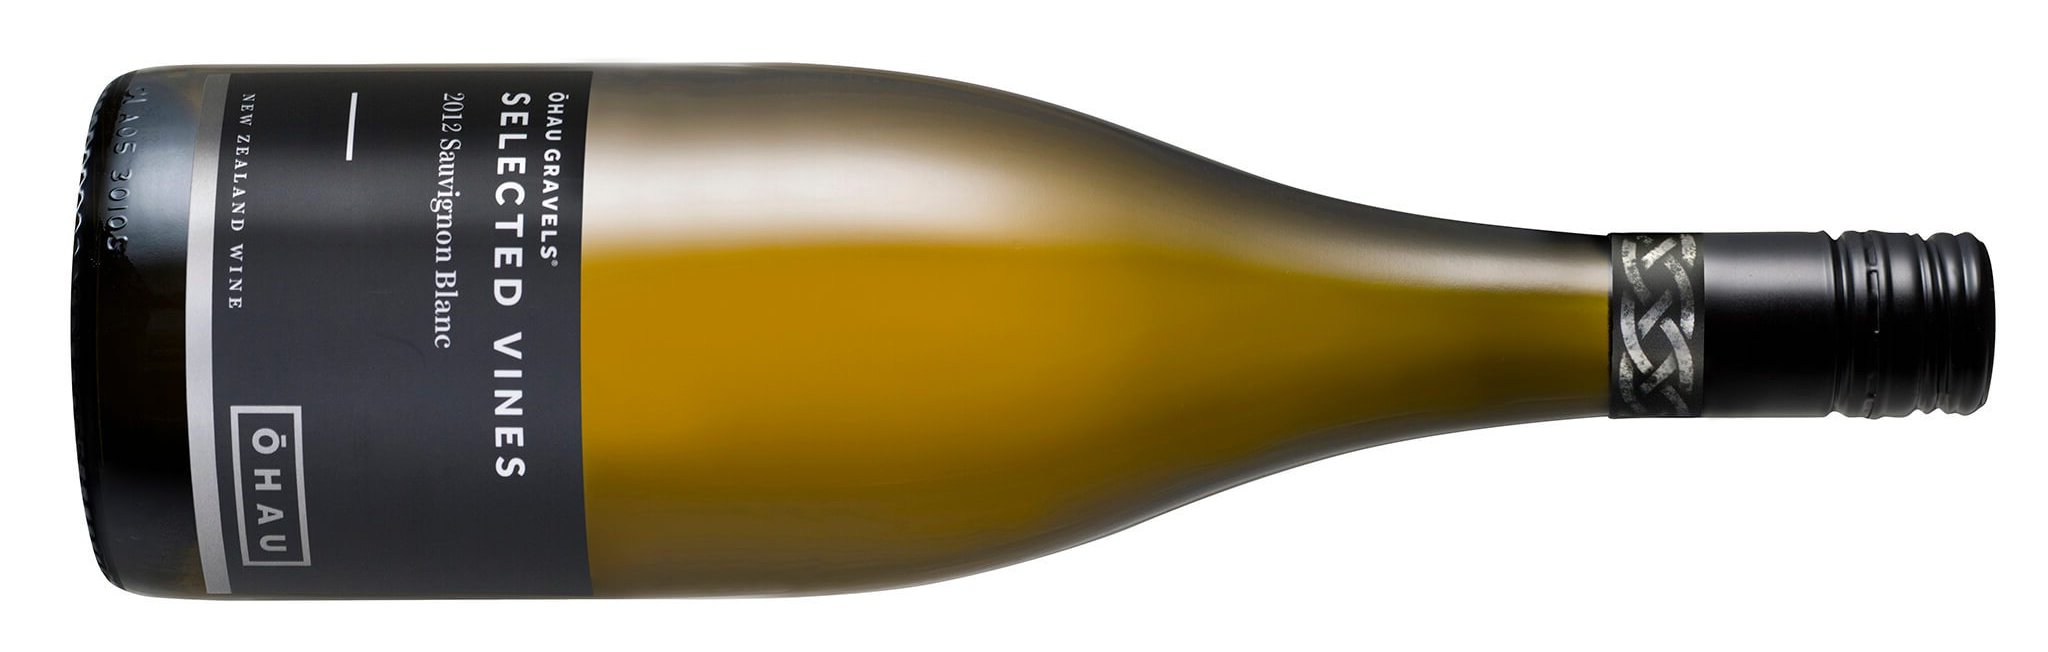 Selected Vines - Sauvignon Blanc 2012